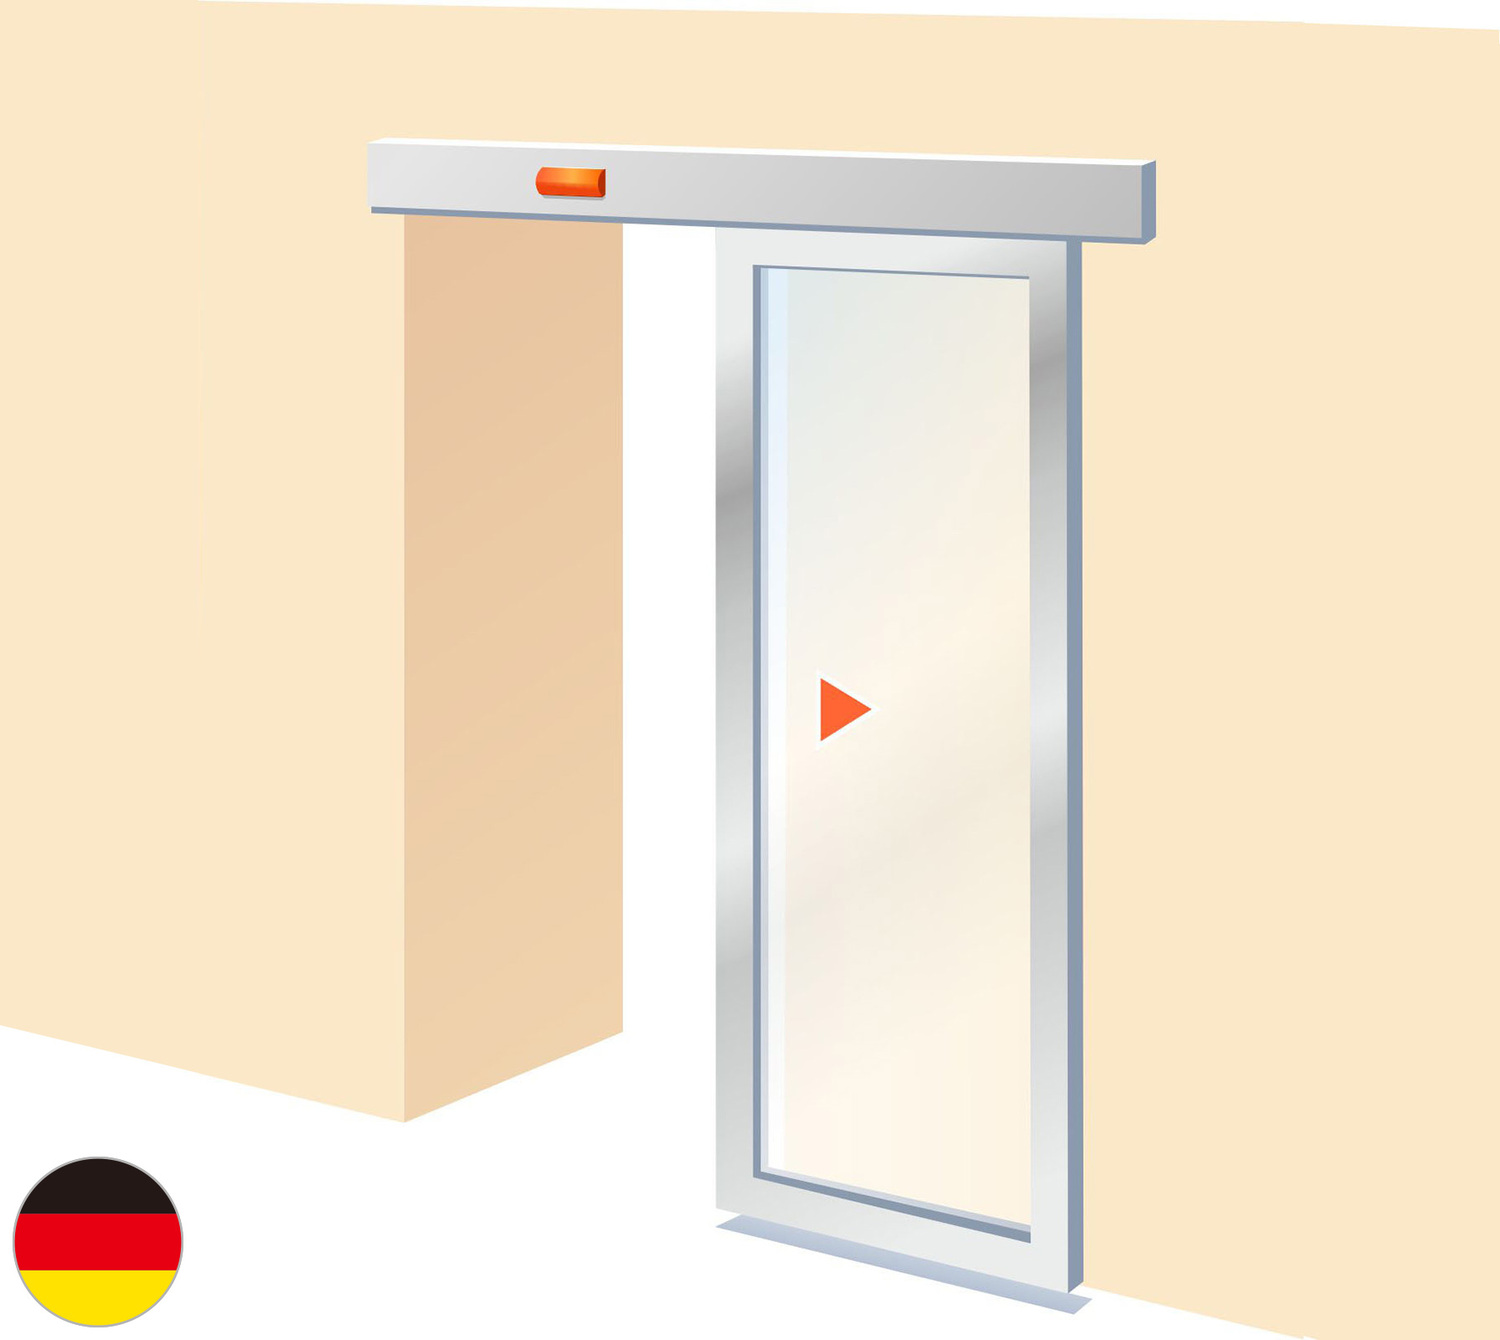 Дверь одностворчатая <span style="font-weight: bold;">(ш)1200х(в)2200</span>, ES200 Easy Dormakaba (Германия)<br>